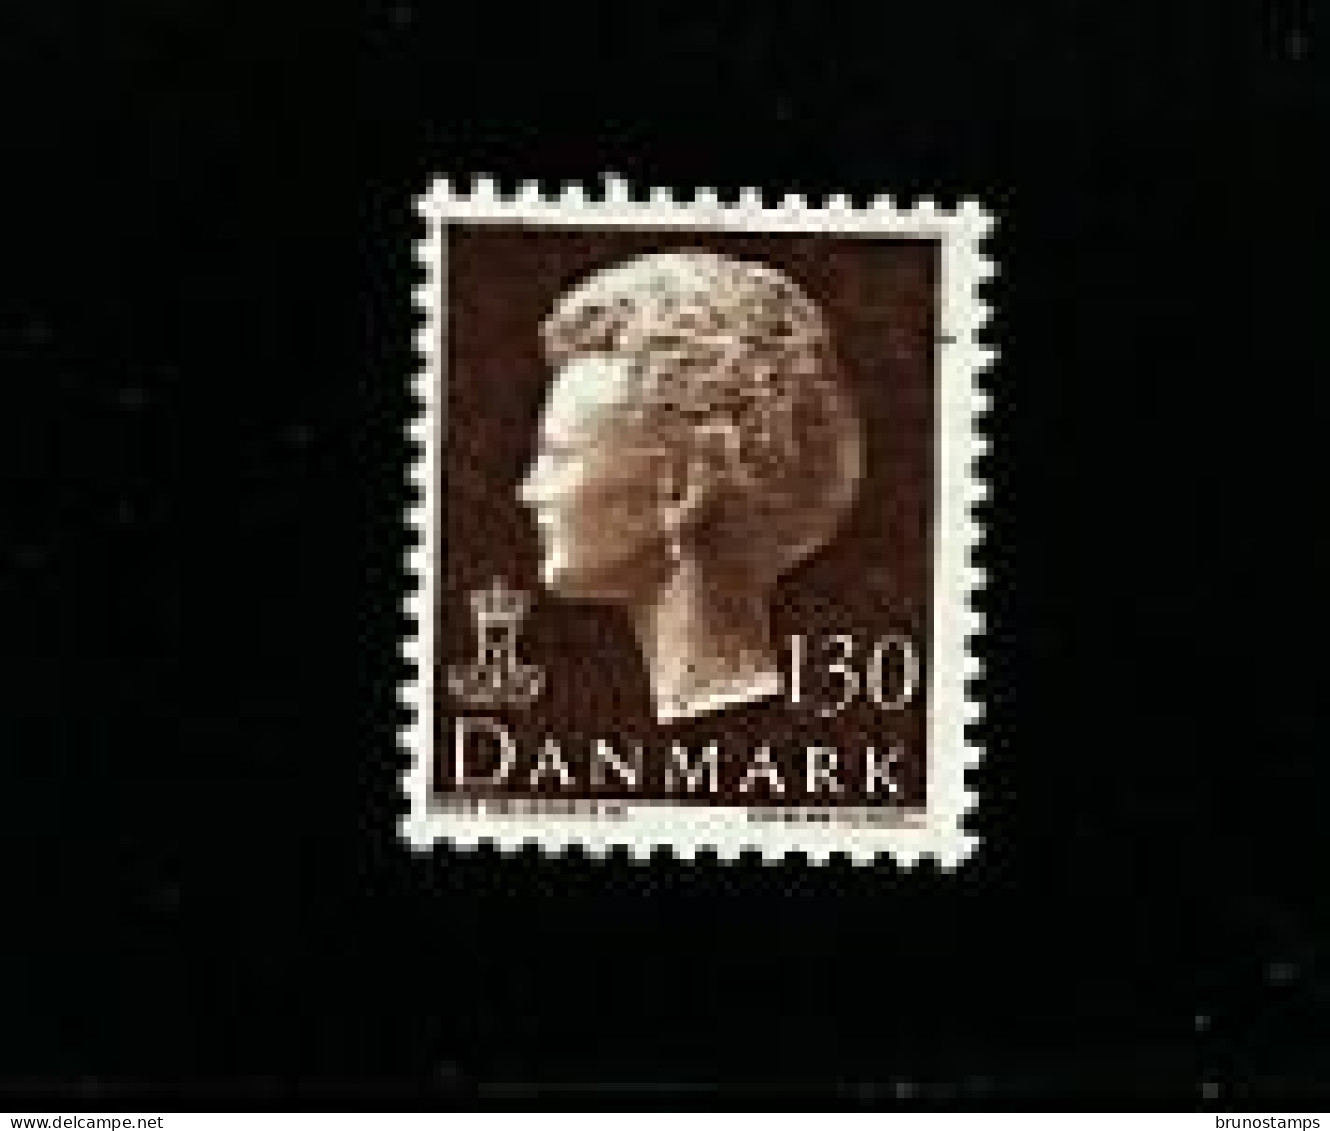 DENMARK/DANMARK - 1981  DEFINITIVE  1.30 Kr.  BROWN  MINT NH - Unused Stamps